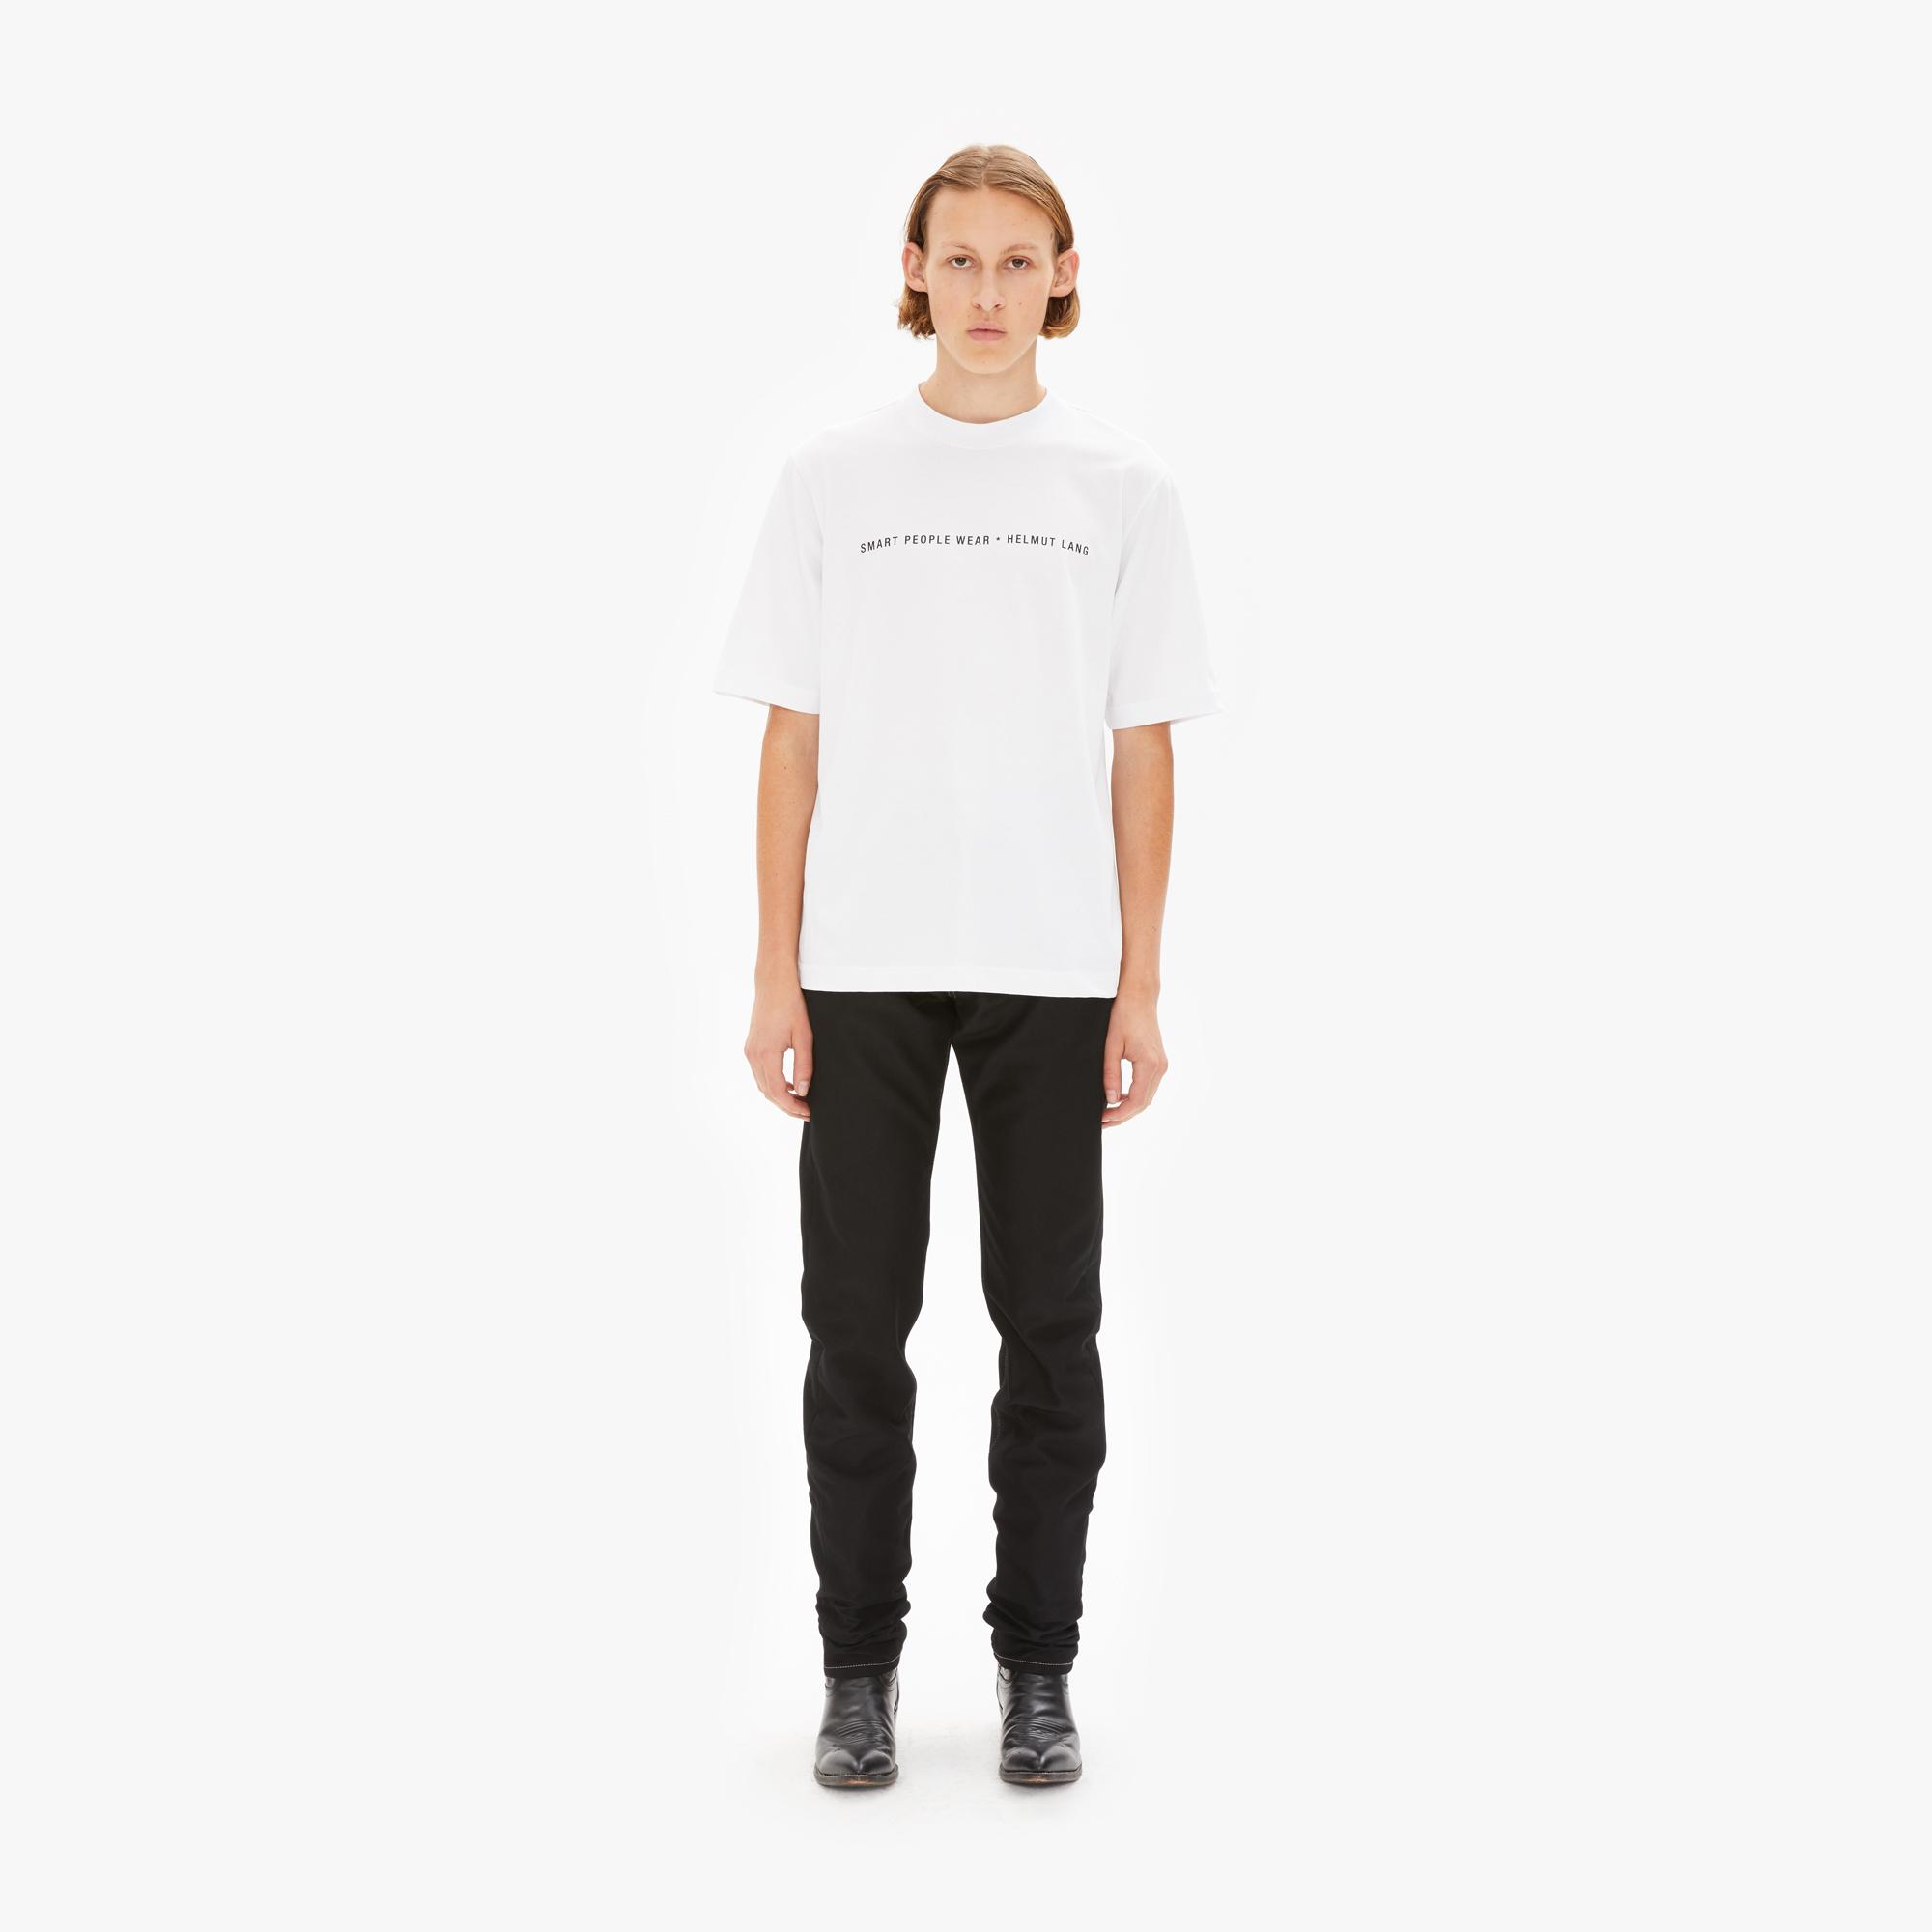 Helmut Lang Men's T-Shirts | WWW.HELMUTLANG.COM